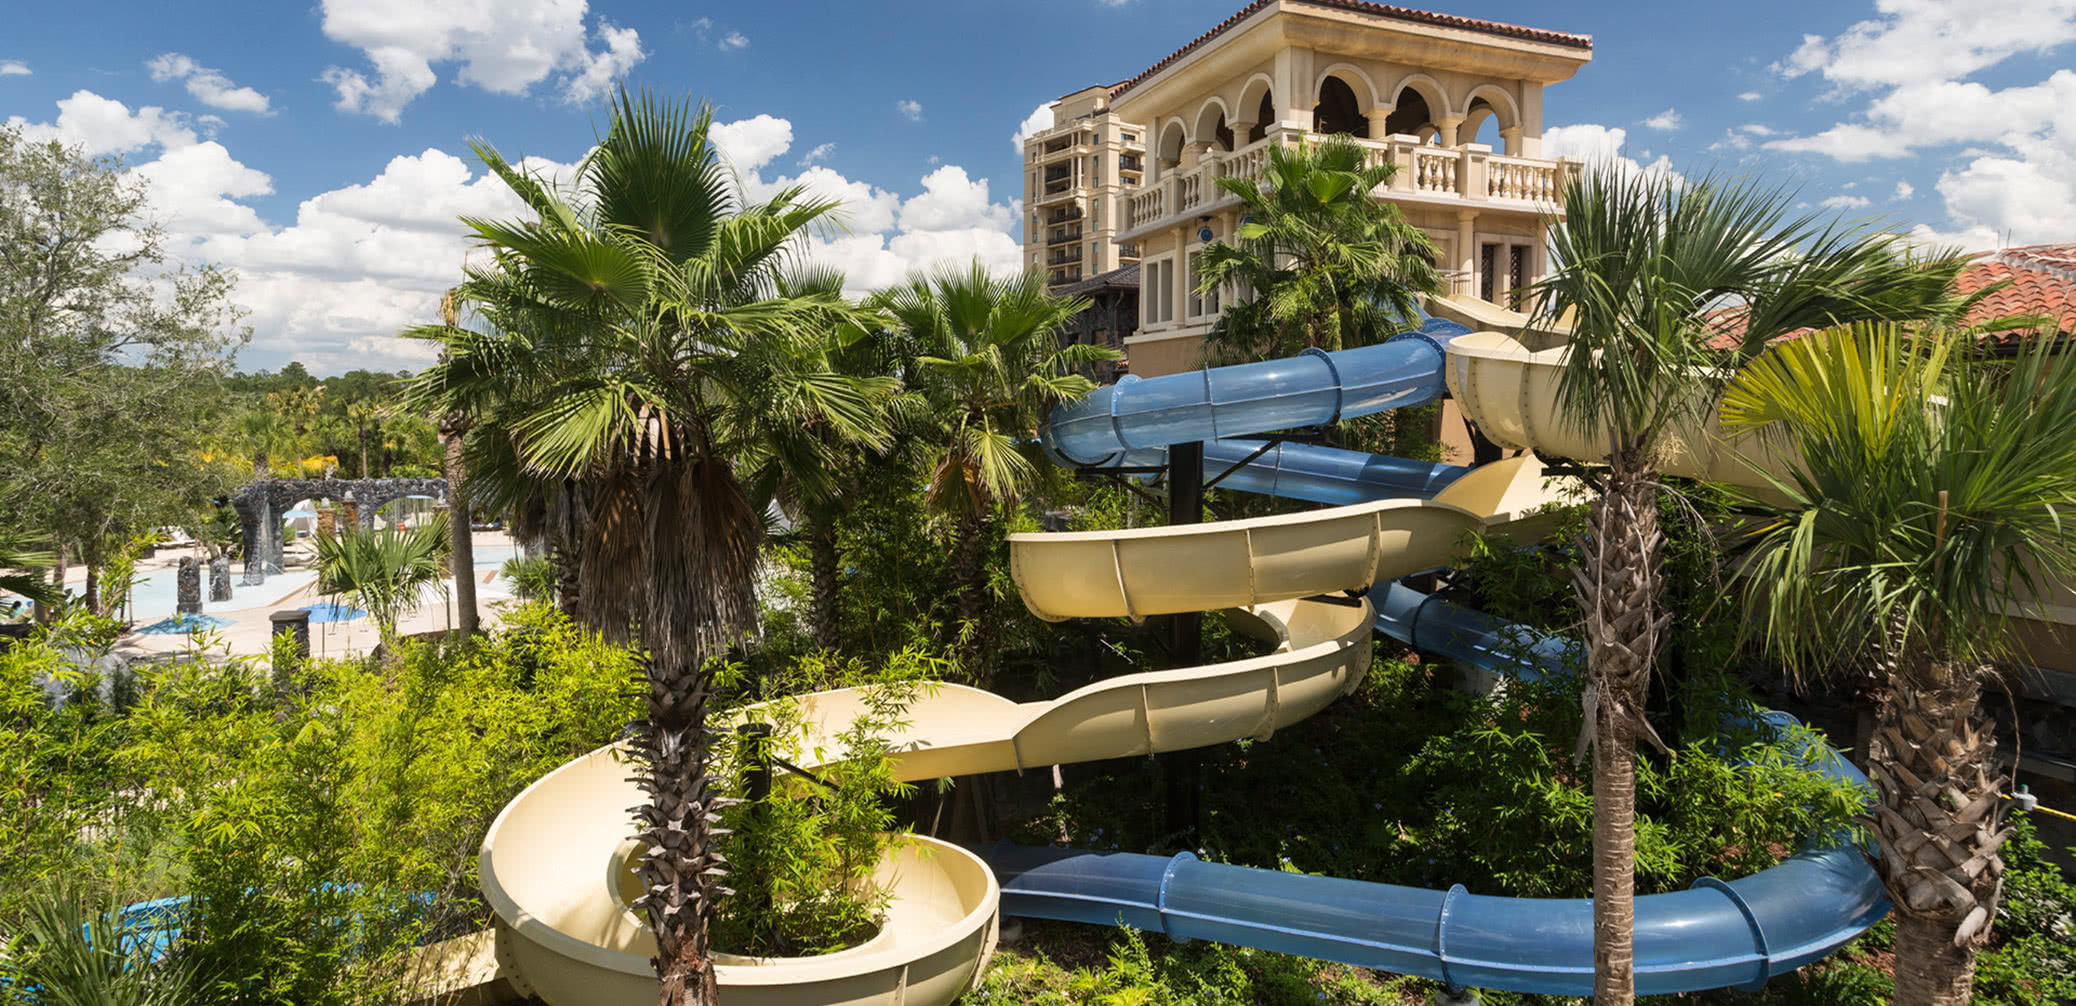 Four Seasons Orlando Vs. Ritz-Carlton Vs. JW Marriott: Which Is Best?